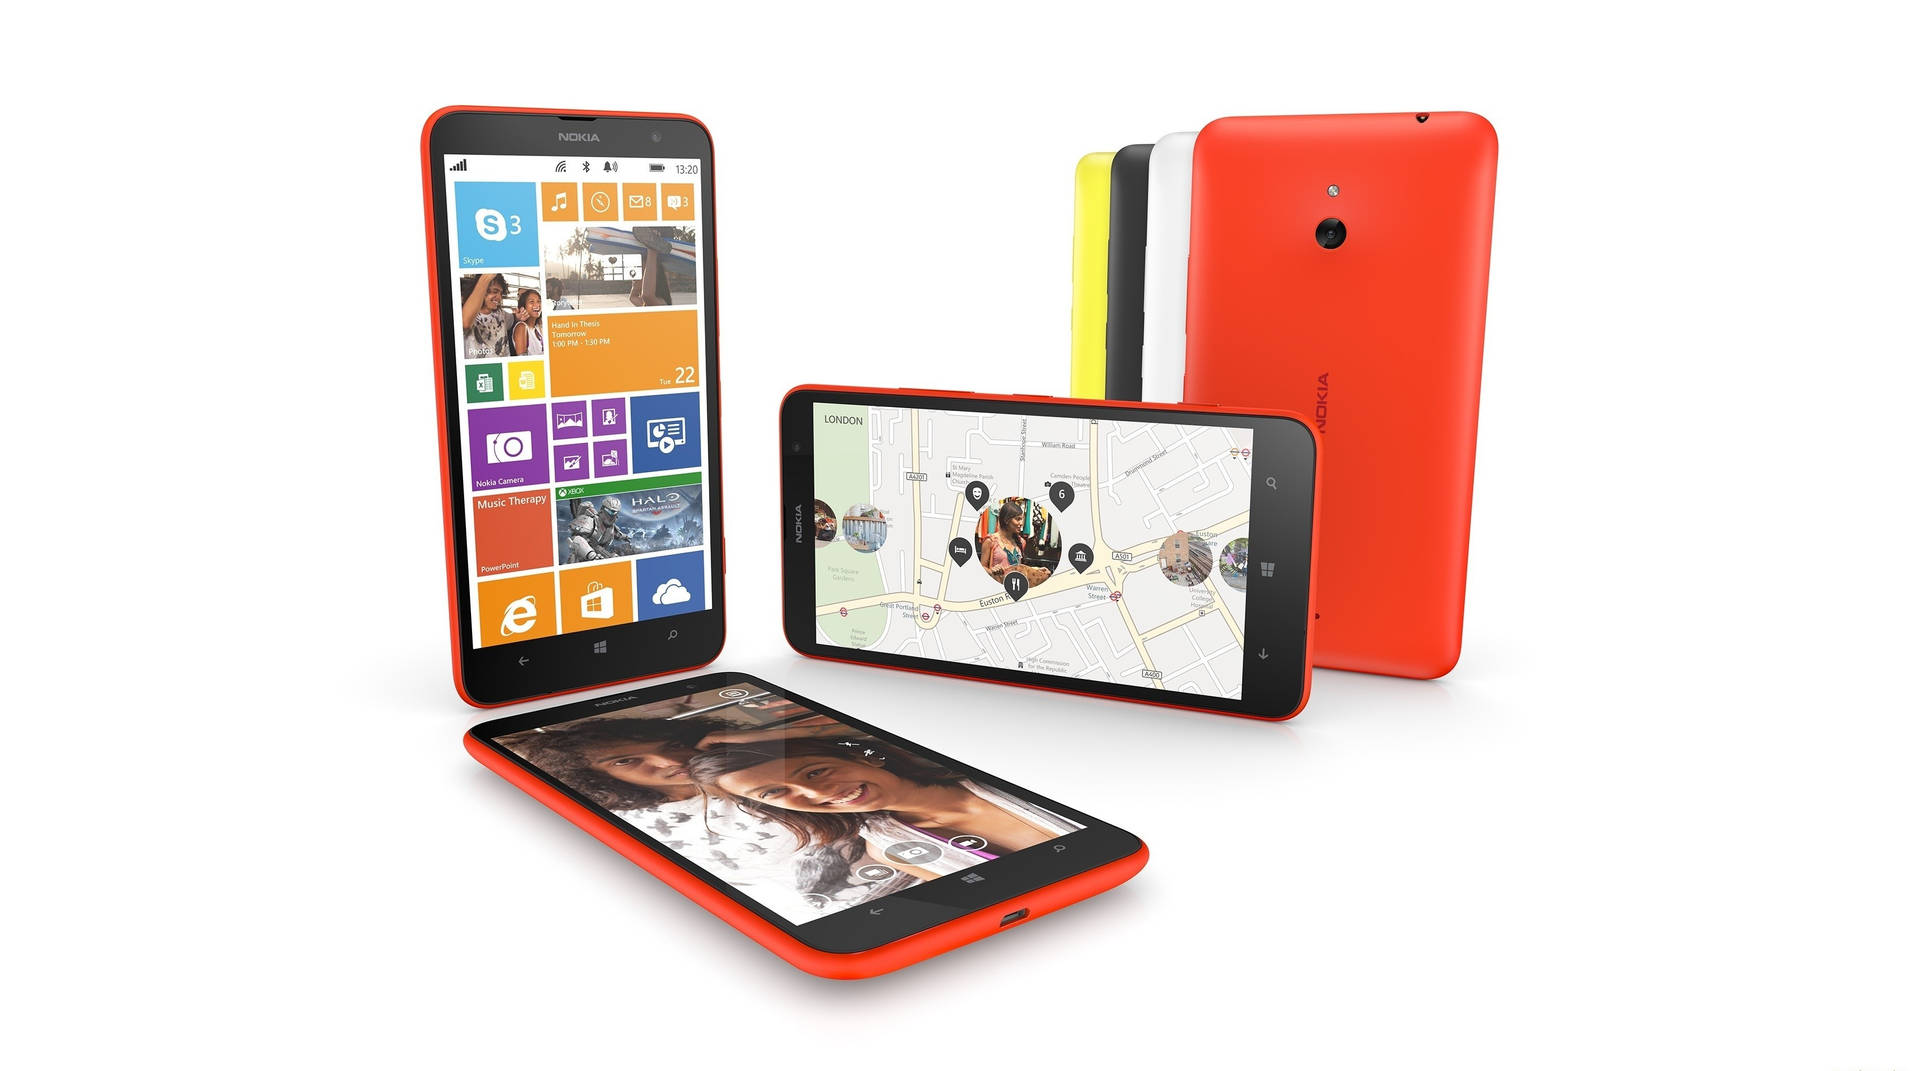 Nokia Lumia 1320 Phablet Smartphone